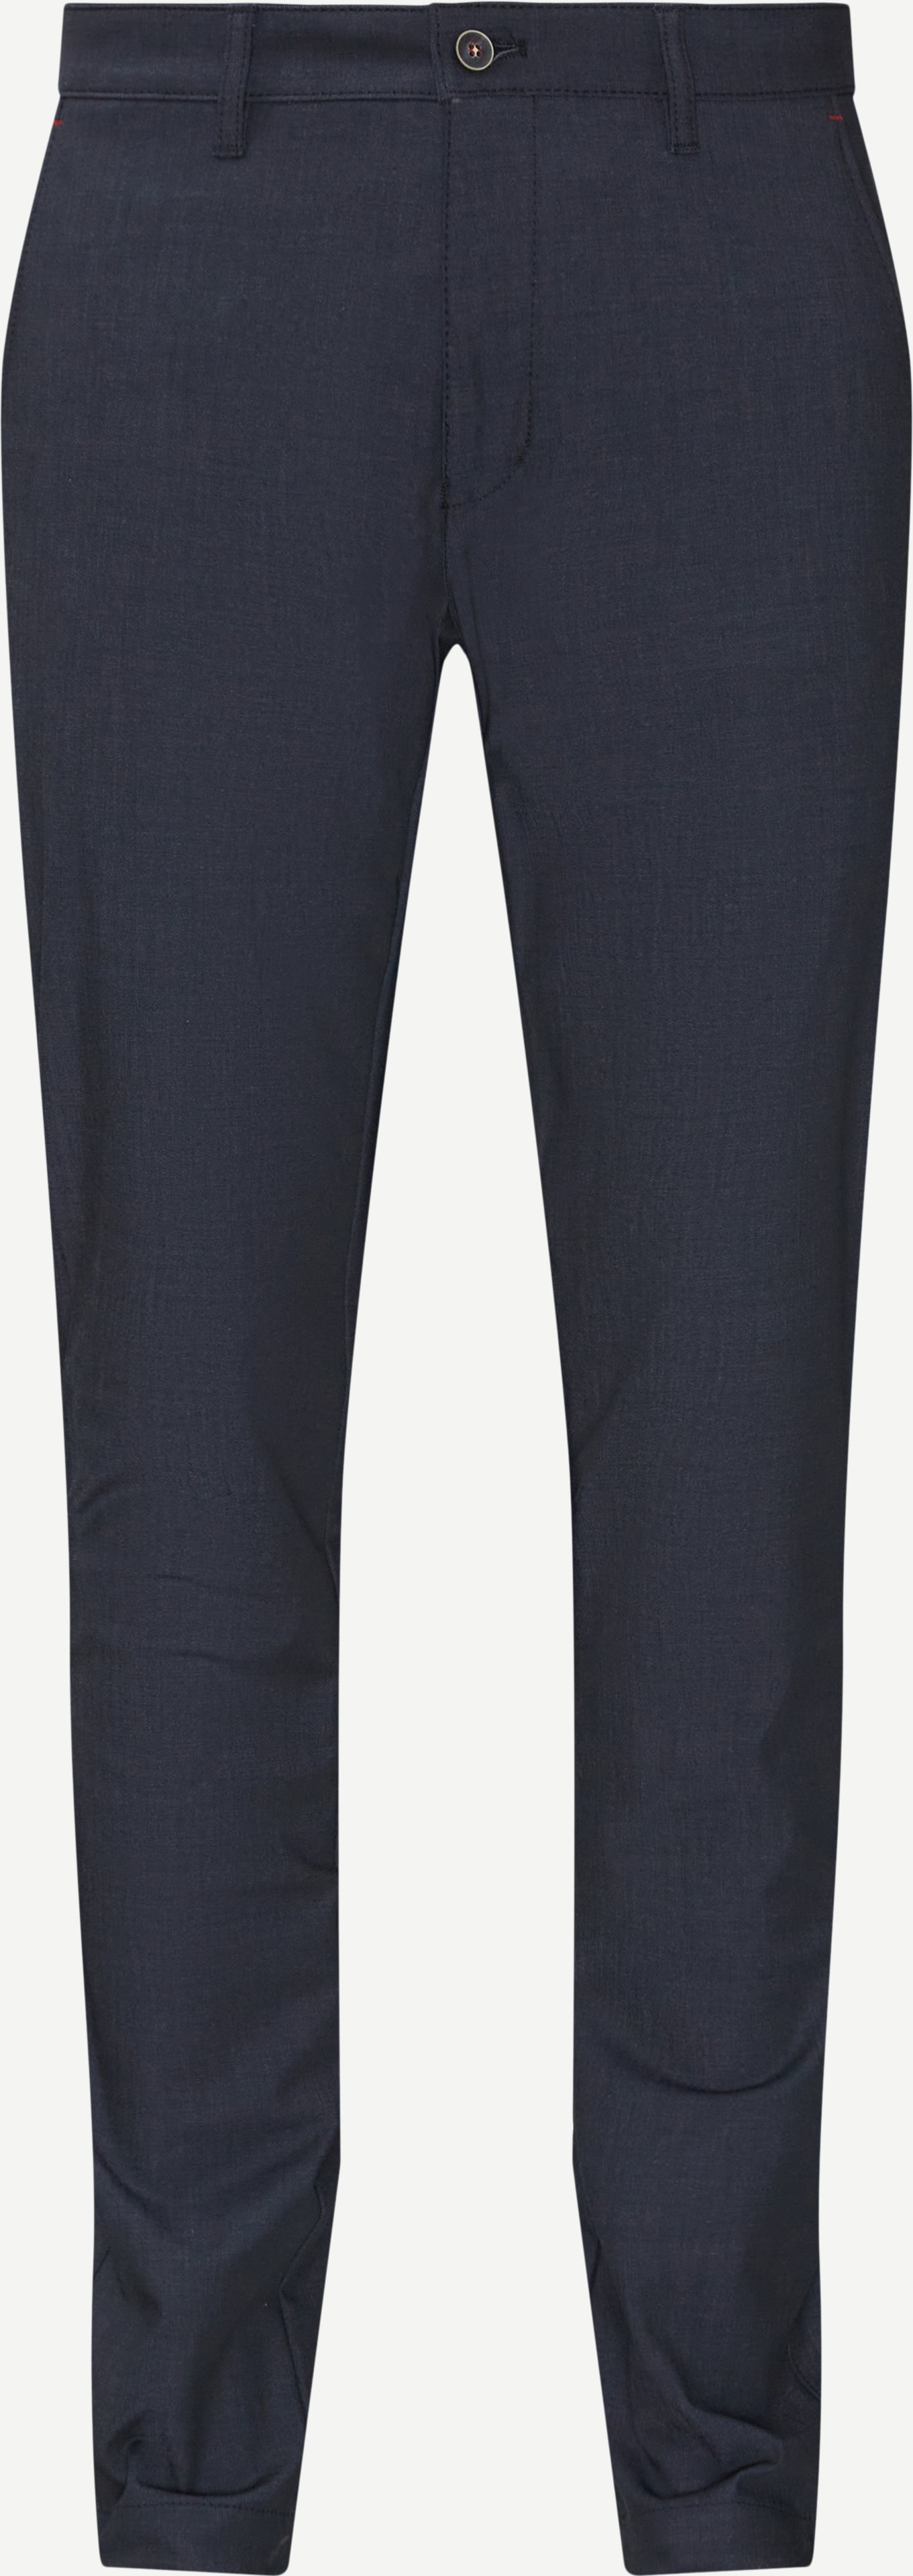 Sunwill Trousers 503139-7731 Blue